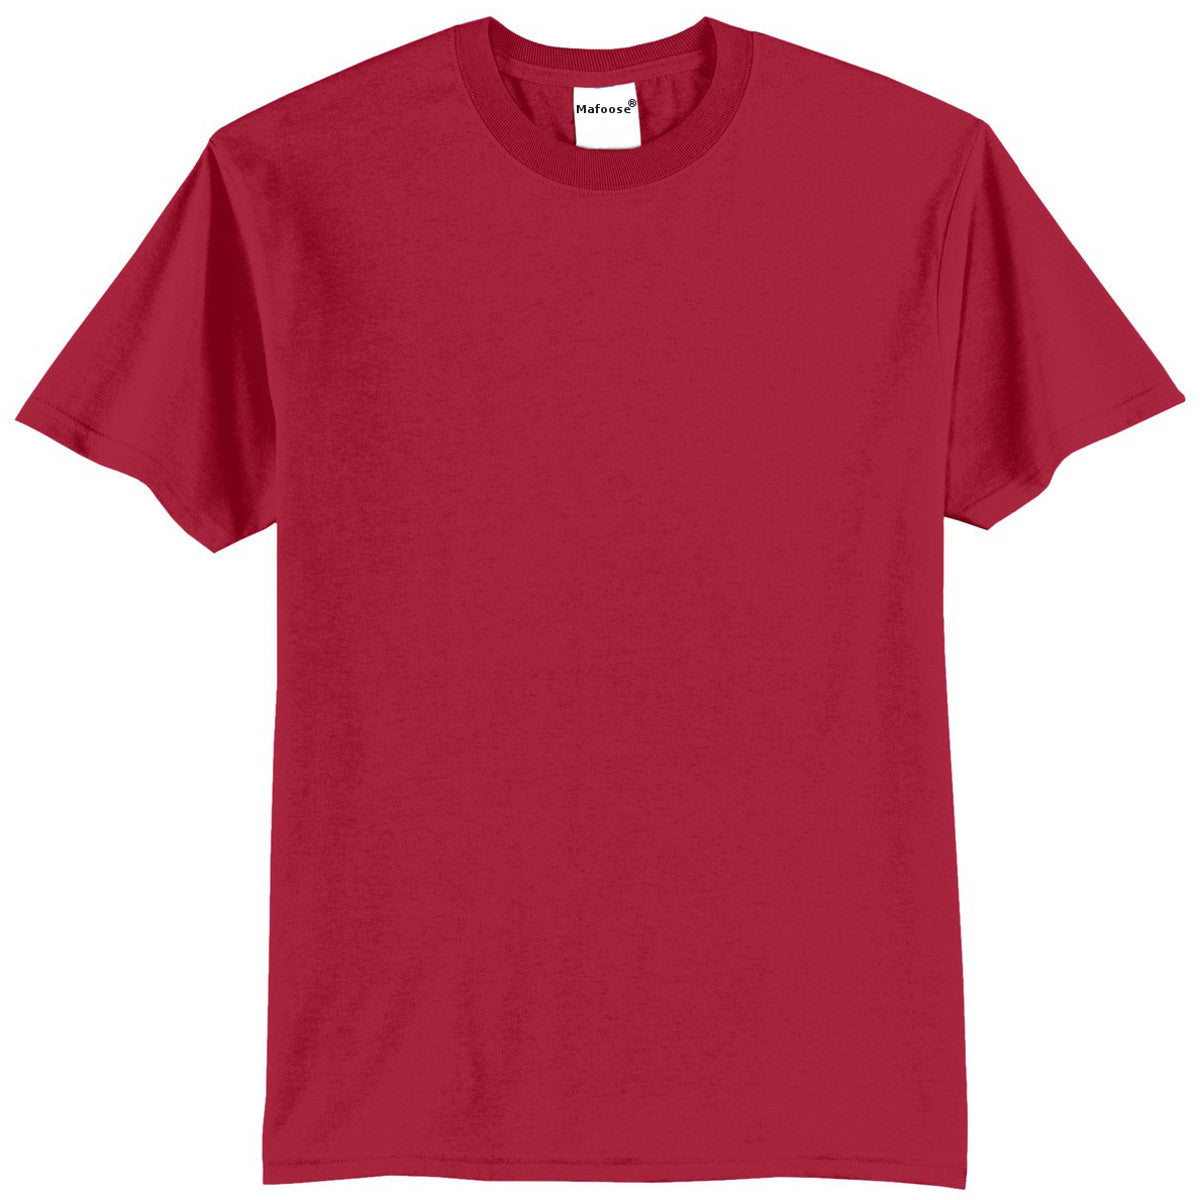 Mafoose Men's Core Blend Tee Shirt Red